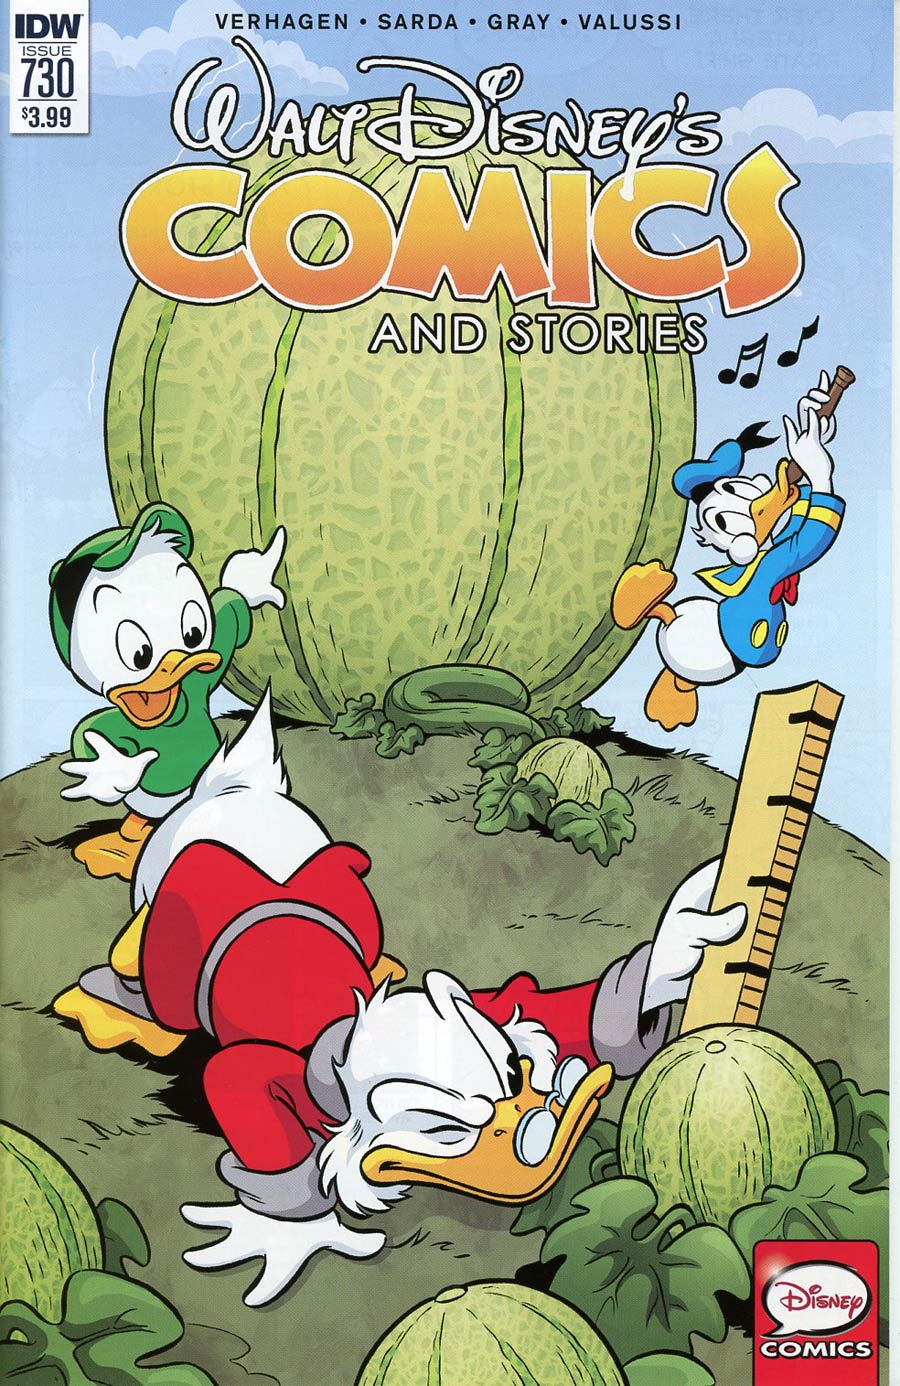 Walt Disneys Comics & Stories #730 Cover A Regular Henrieke Goorhuis Cover